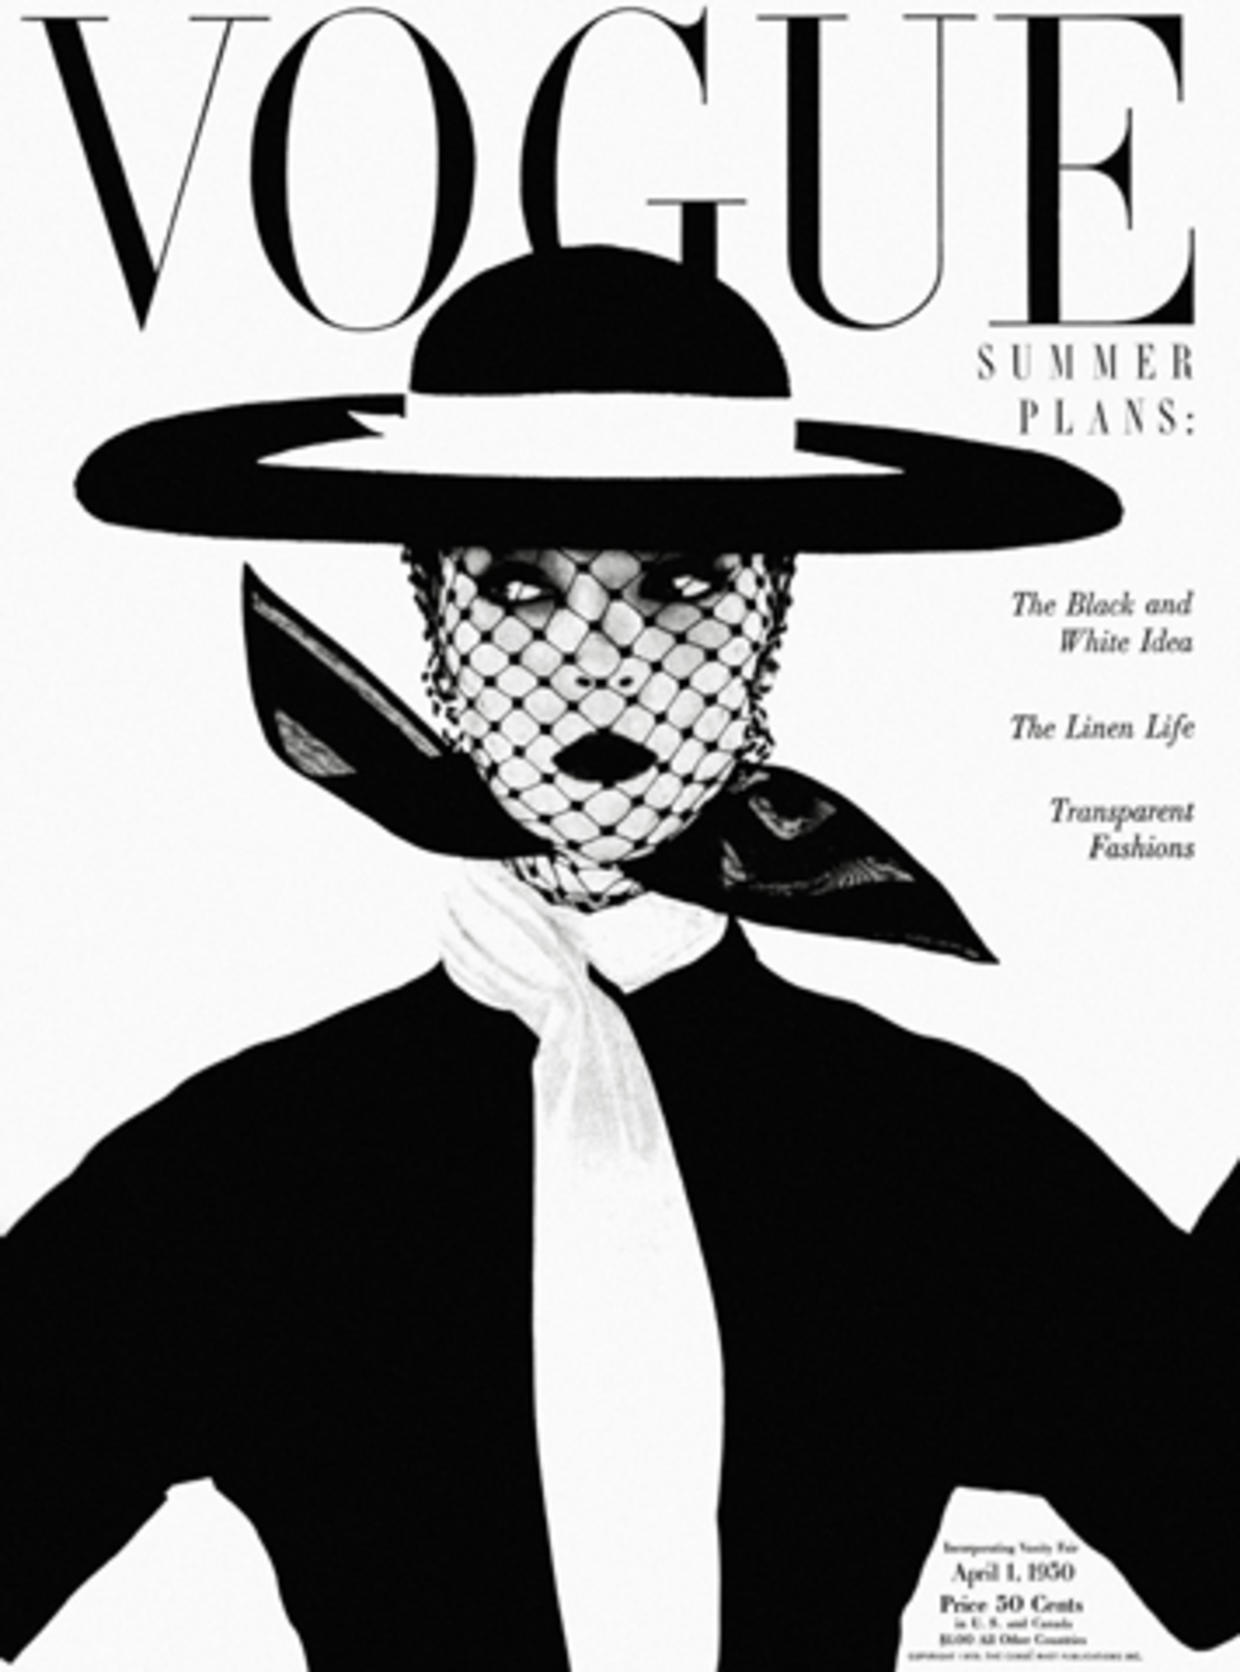 Classic Vogue covers - CBS News